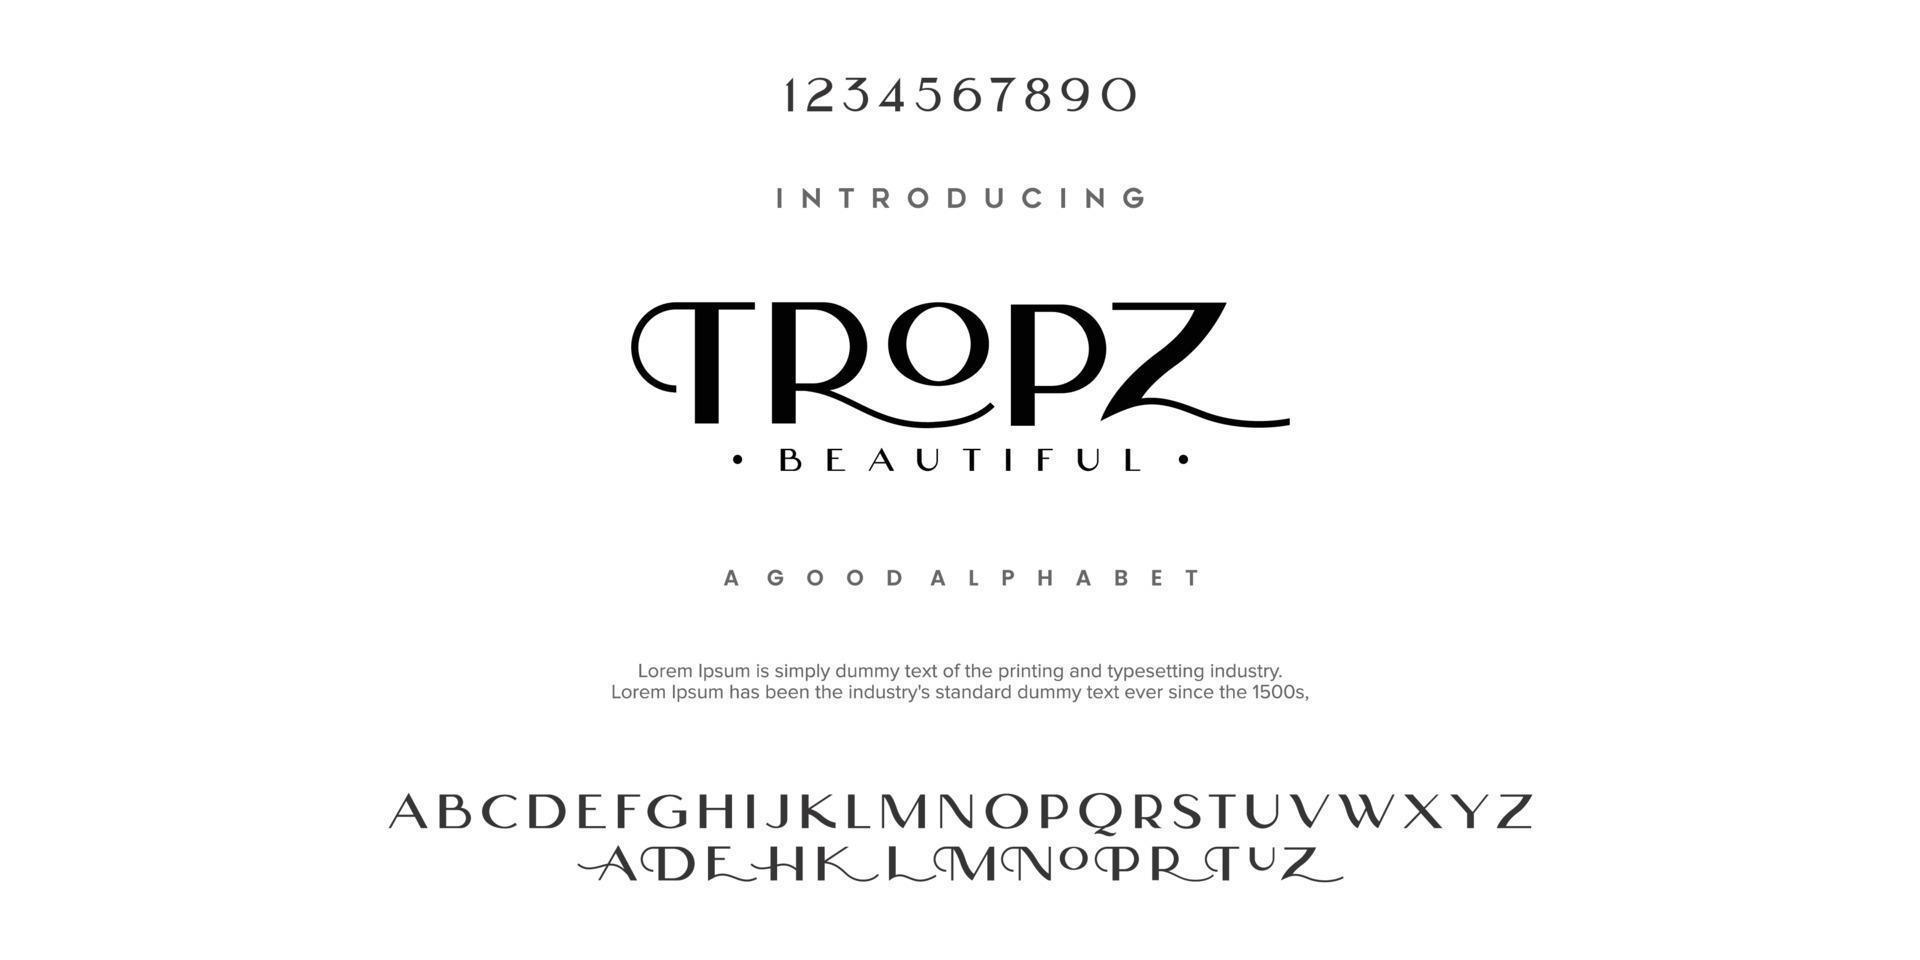 Tropz Modern minimal abstract alphabet fonts. Typography technology, electronic, movie, digital, music, future, logo creative font. vector illustration